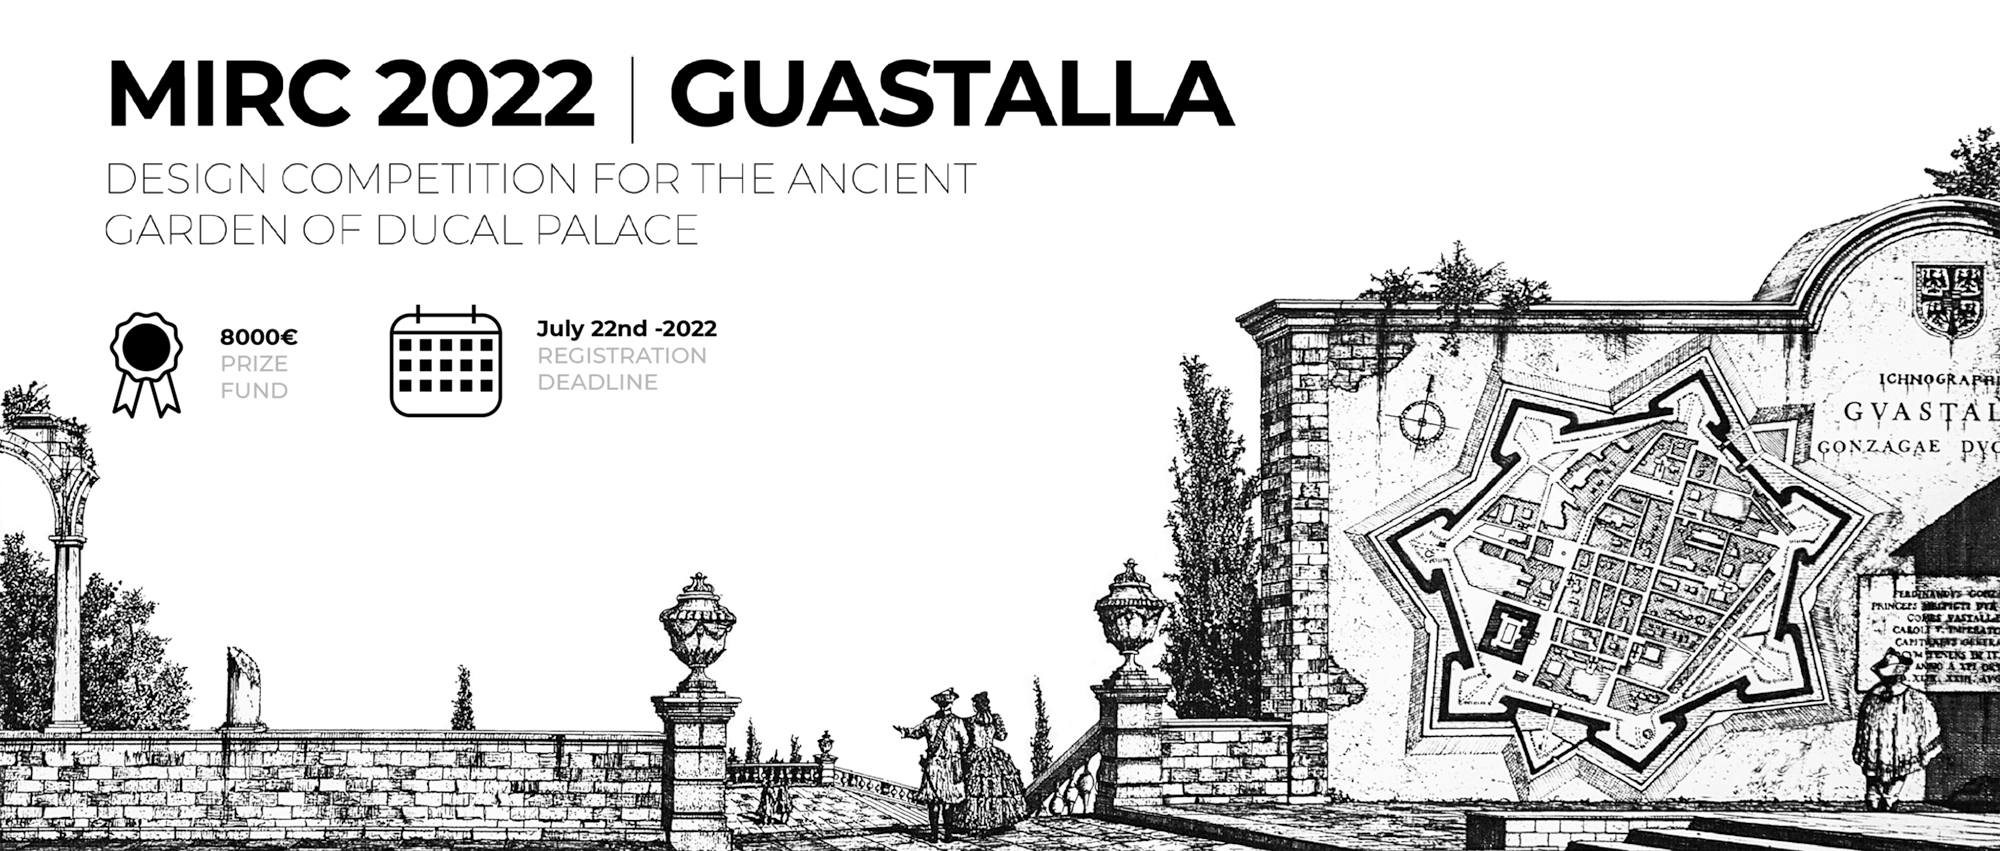 MIRC 2022|Guastalla 公爵府古花园设计竞赛